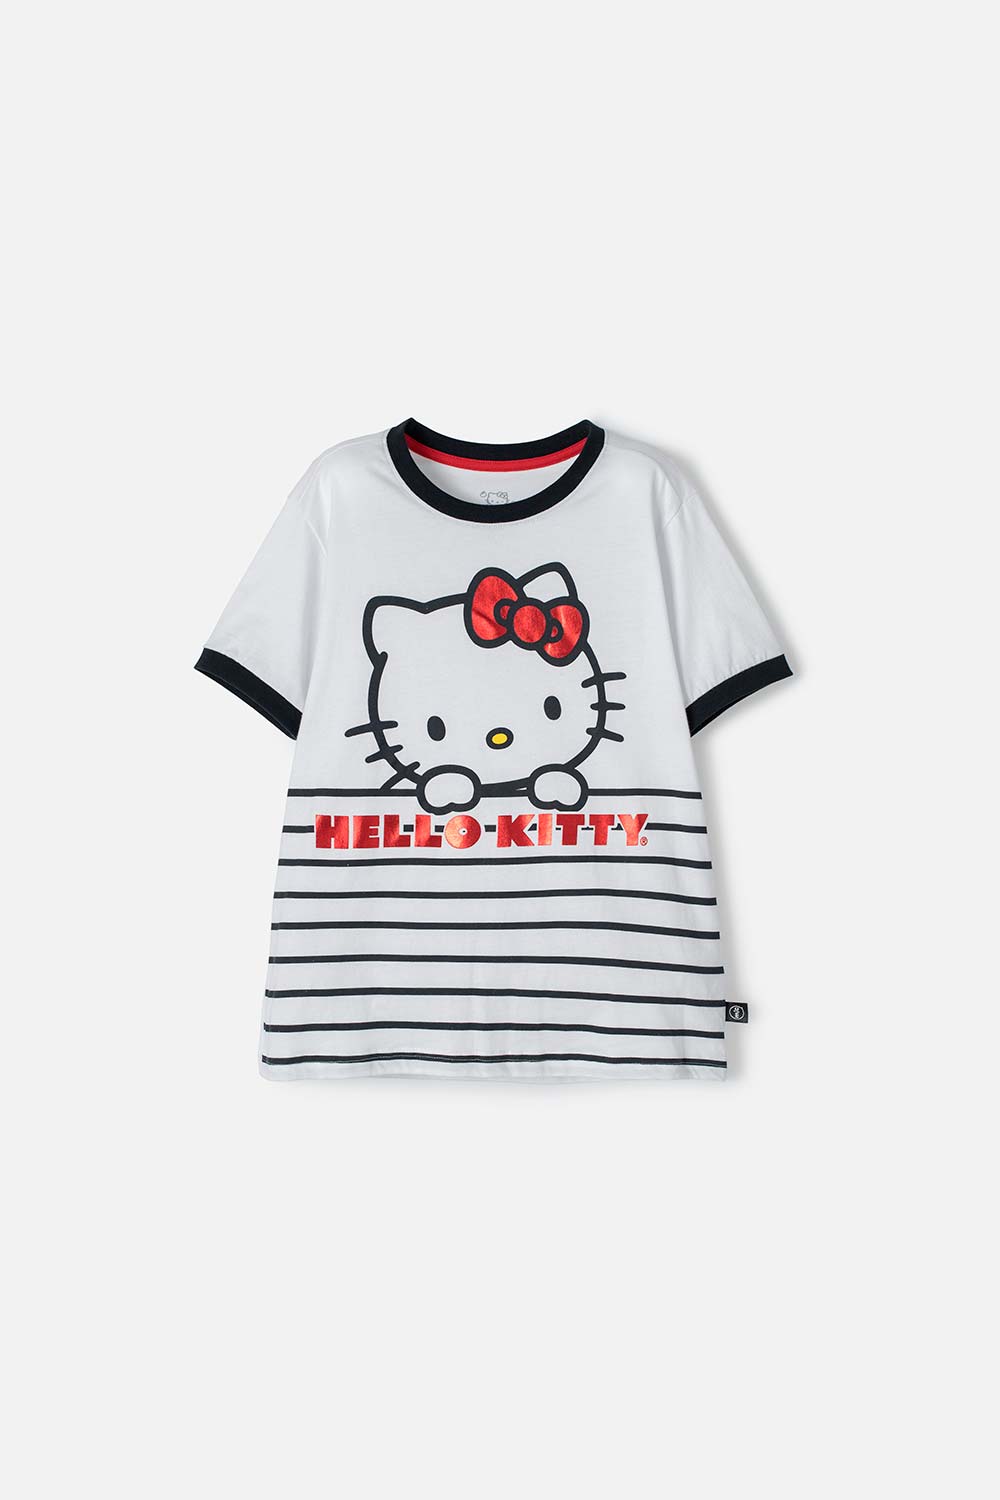 Camiseta de Hello Kitty manga corta blanco, rojo y azul para niña 4-0